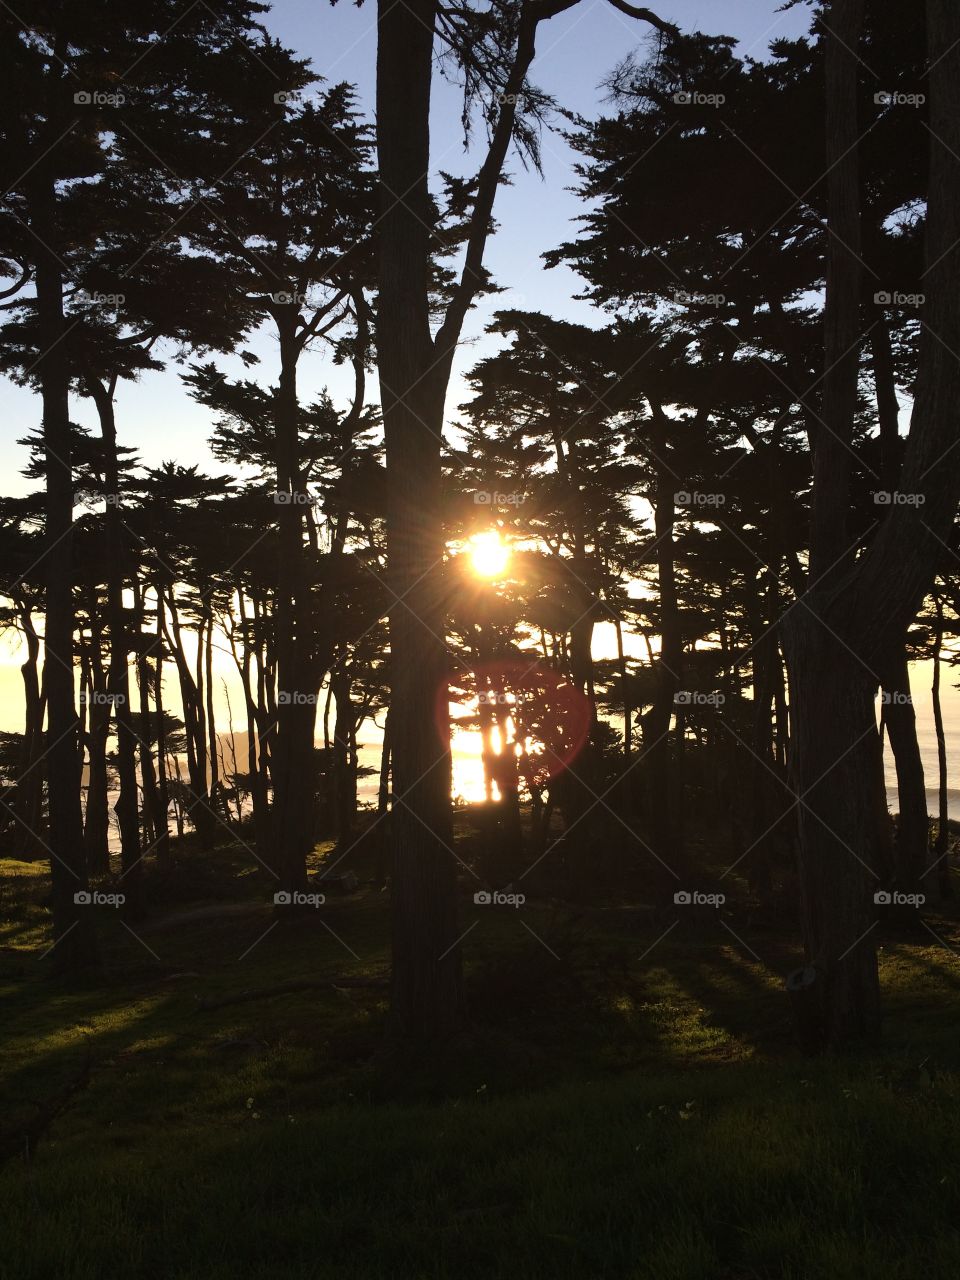 San Francisco beach sunset through the trees 